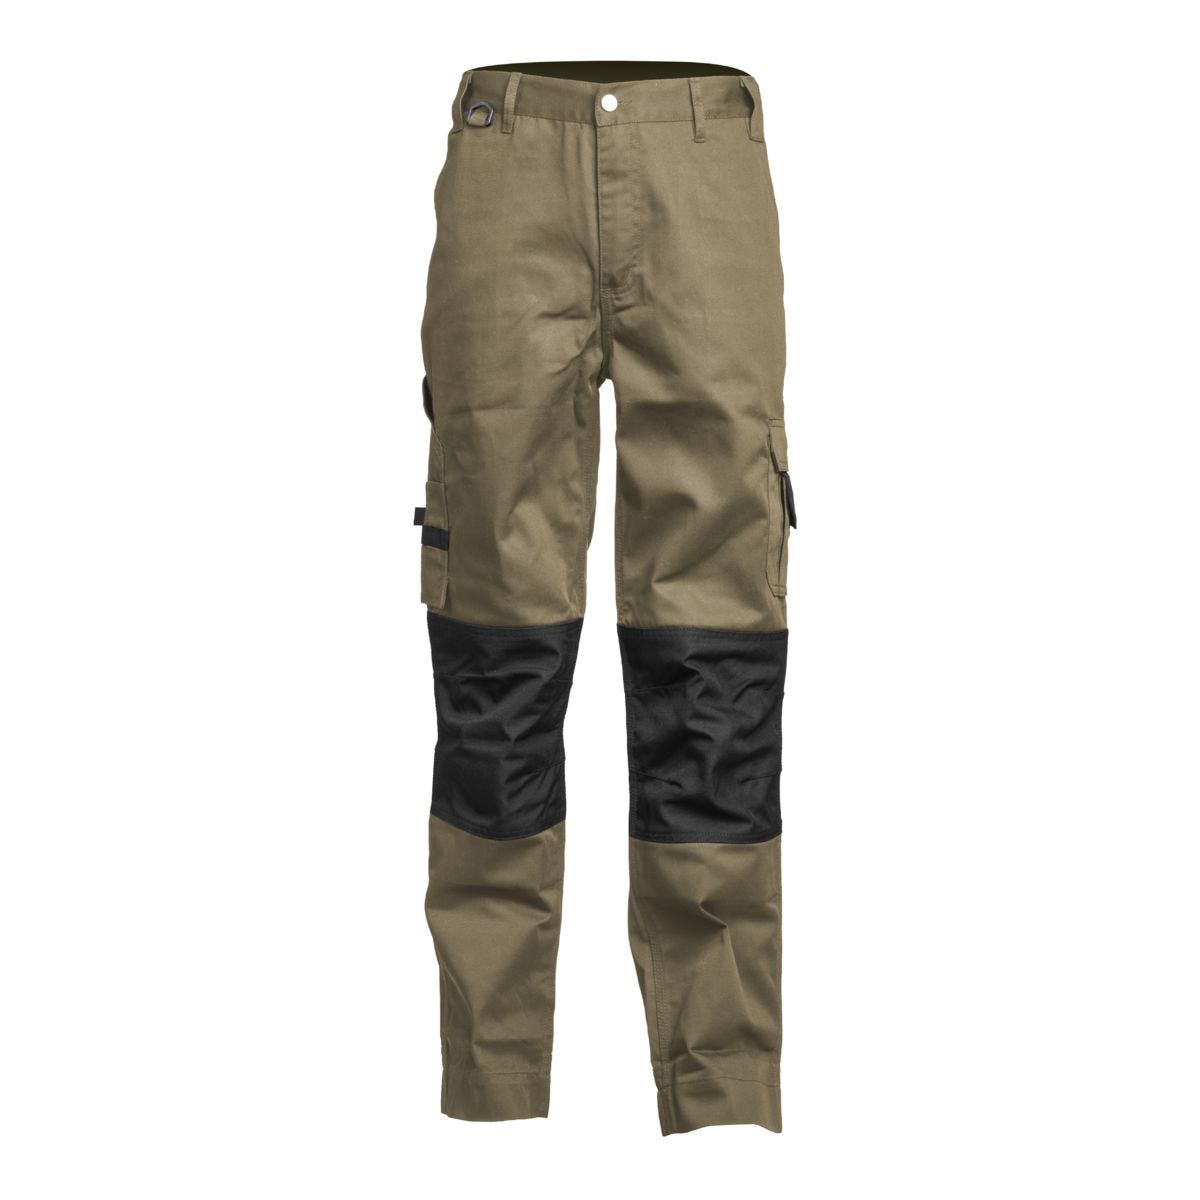 Pantalon CLASS beige - COVERGUARD - Taille 2XL 0